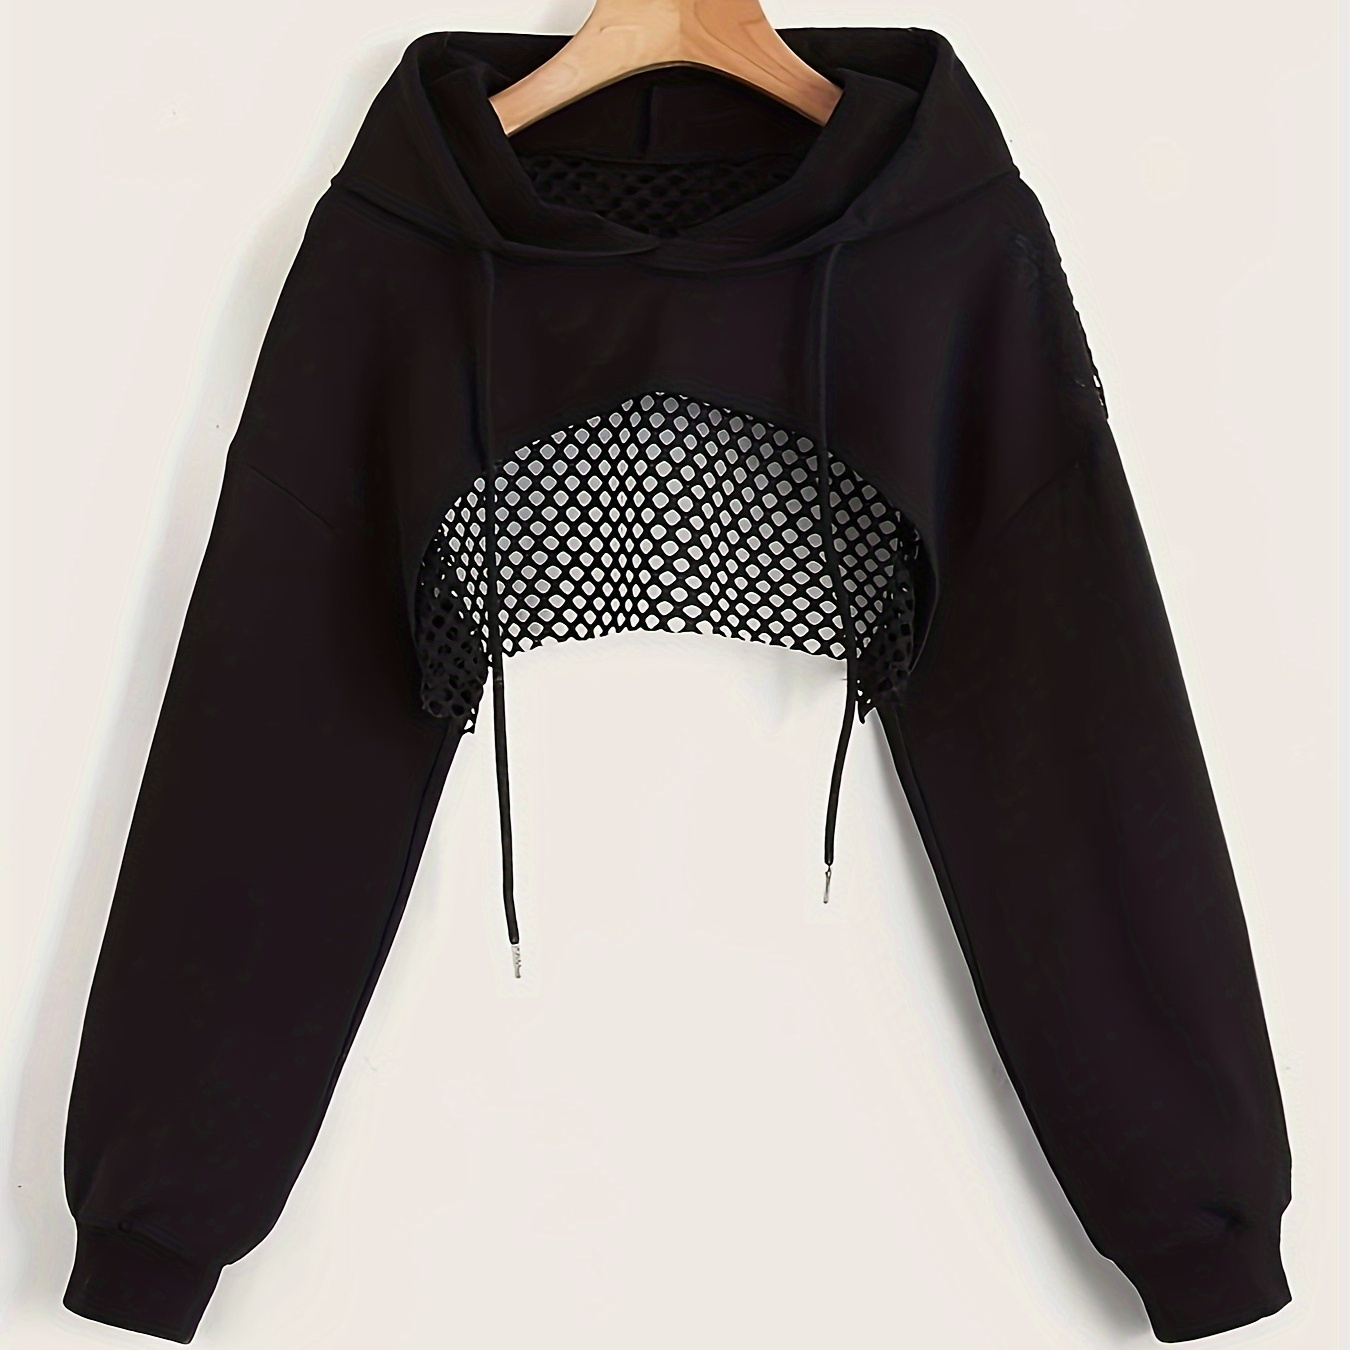 

Solid Color Causal Sports Crop Hooded Sweatshirt, Drawstring Long Sleeve Pullover Hoodie, Women's Clothing